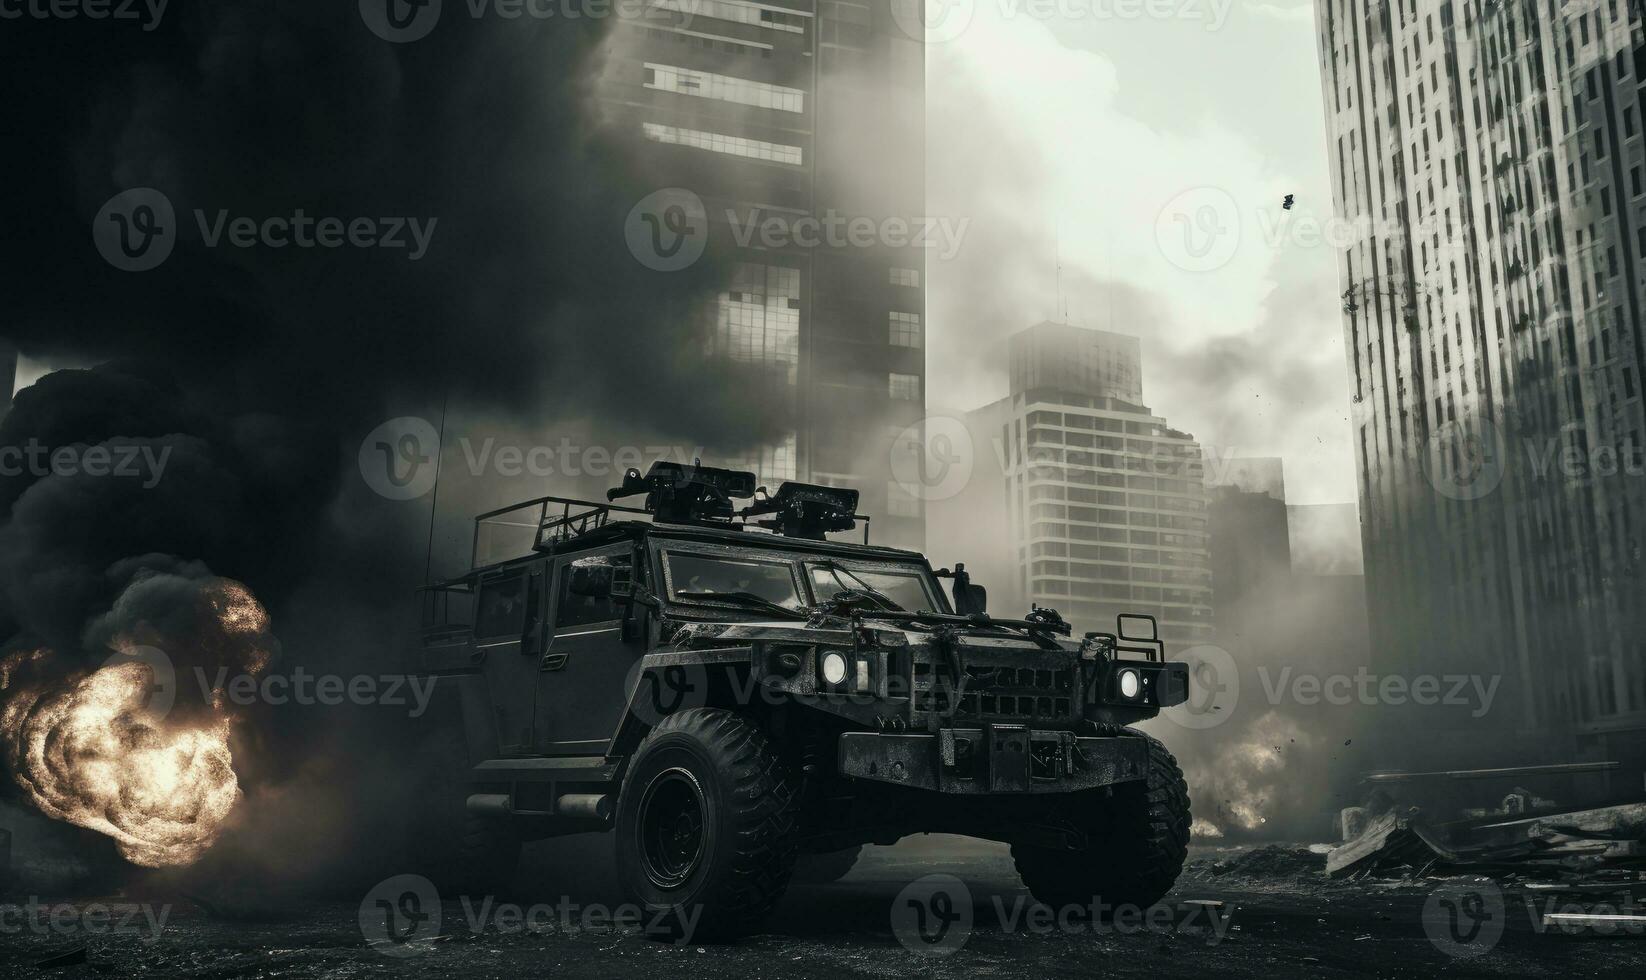 Fiery explosion engulfs a military vehicle amidst a dark. AI generative photo